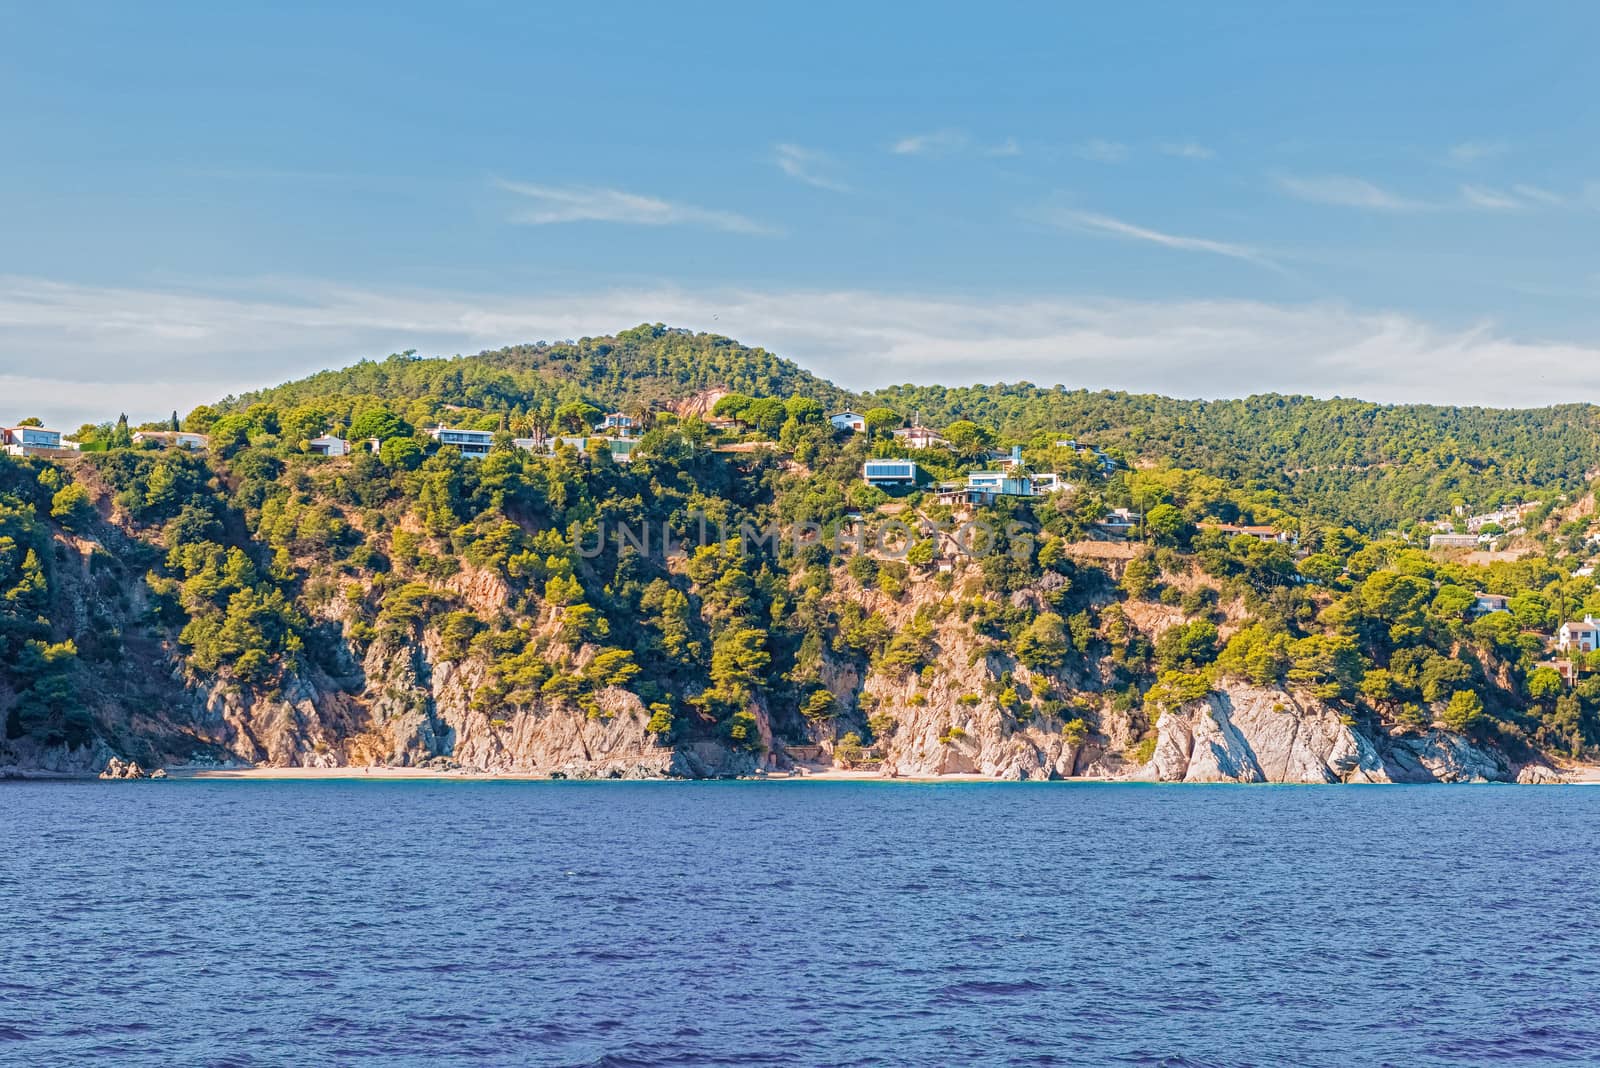 Costa Brava Cliffs in Catalonia, Spain by Marcus